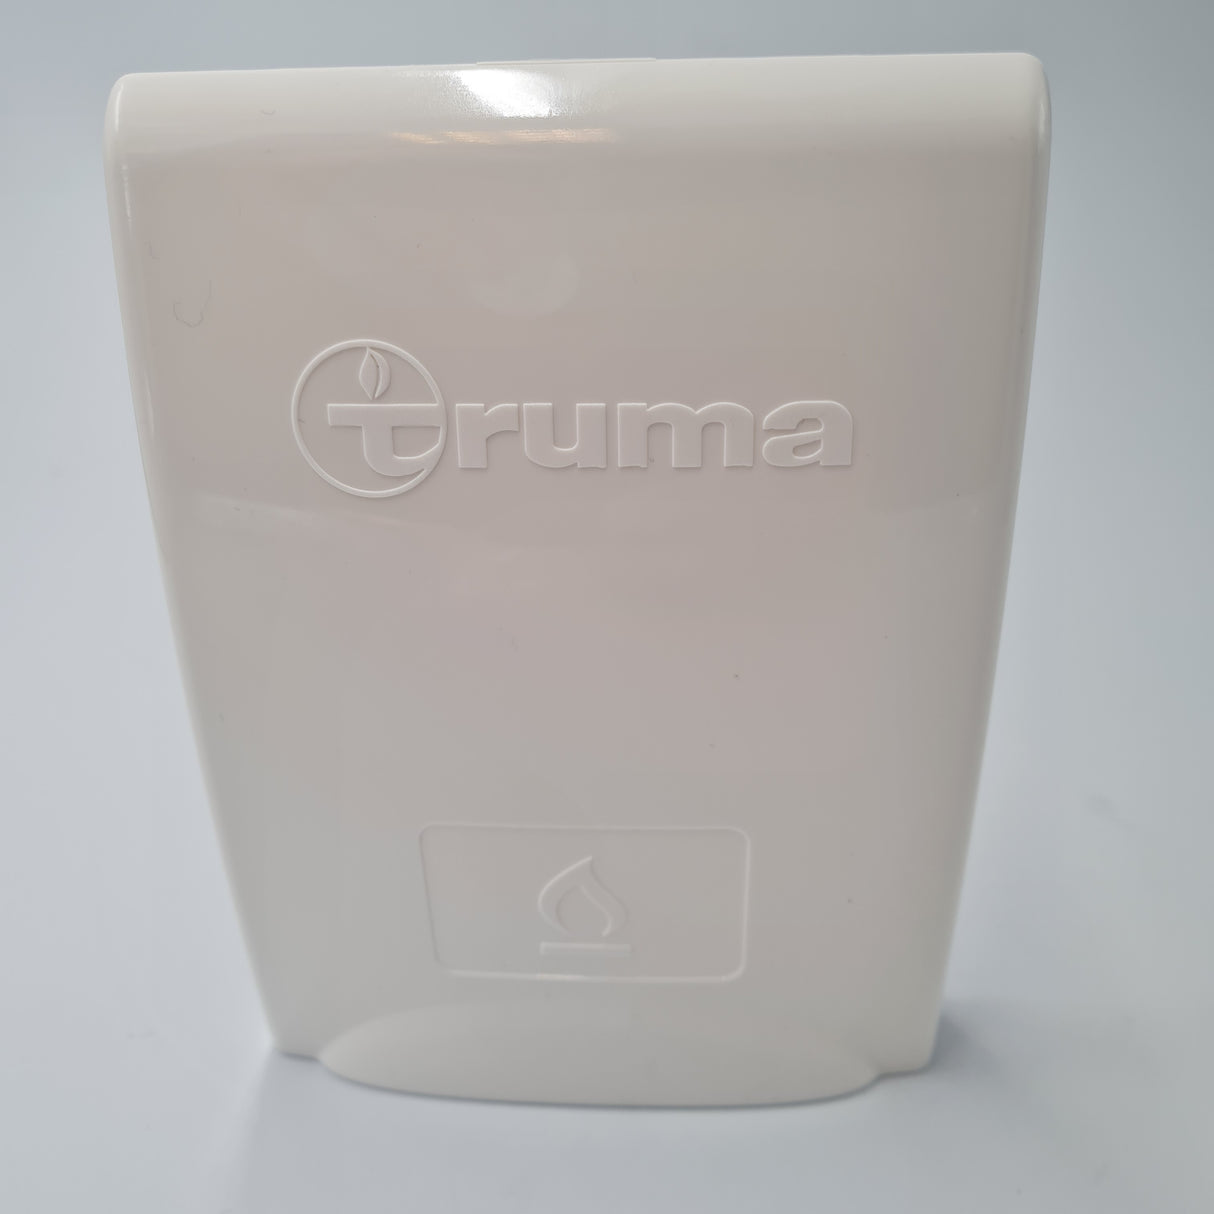 Truma Gas BBQ Point Housing Lid / Cover -White – 40060-99100